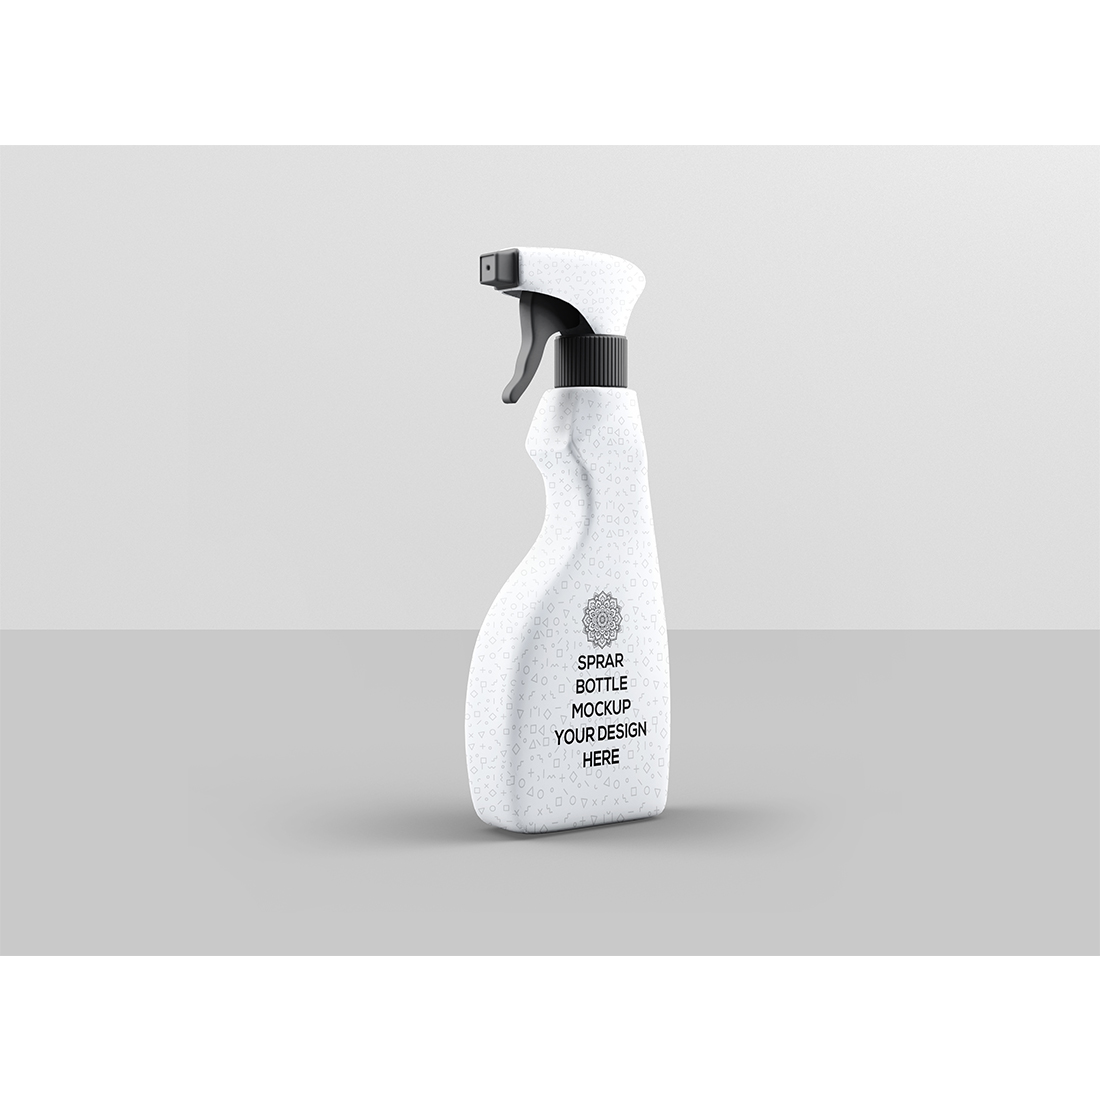 Travel-Size Small Spray Bottle Mockups – PMVCH